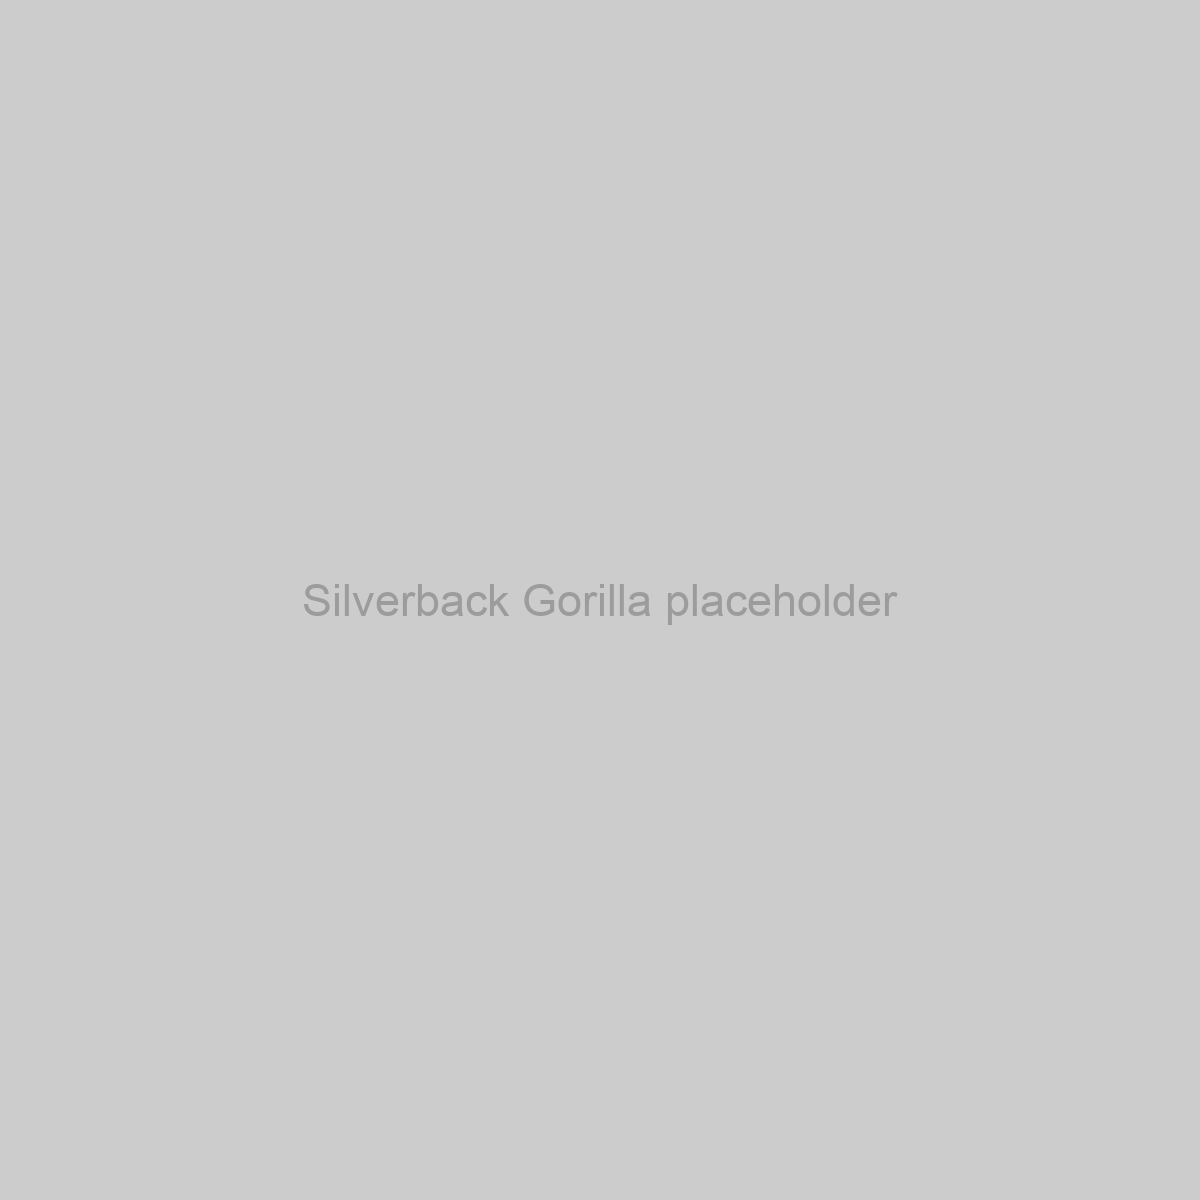 Silverback Gorilla Placeholder Image